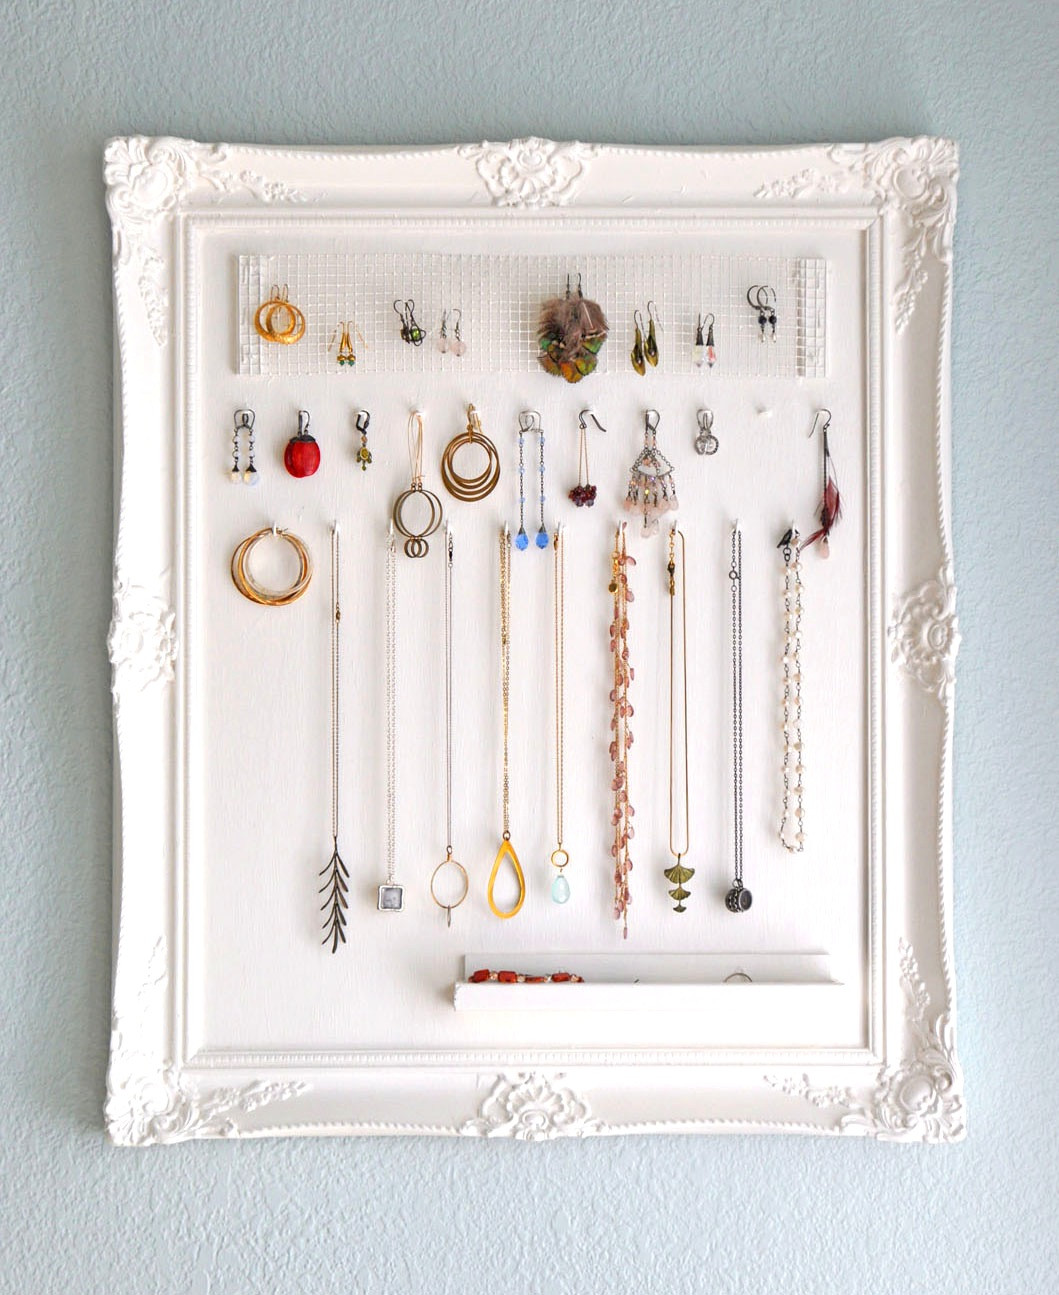 Best ideas about Jewelry Organizer DIY
. Save or Pin 23 Jewelry Display DIYs Now.